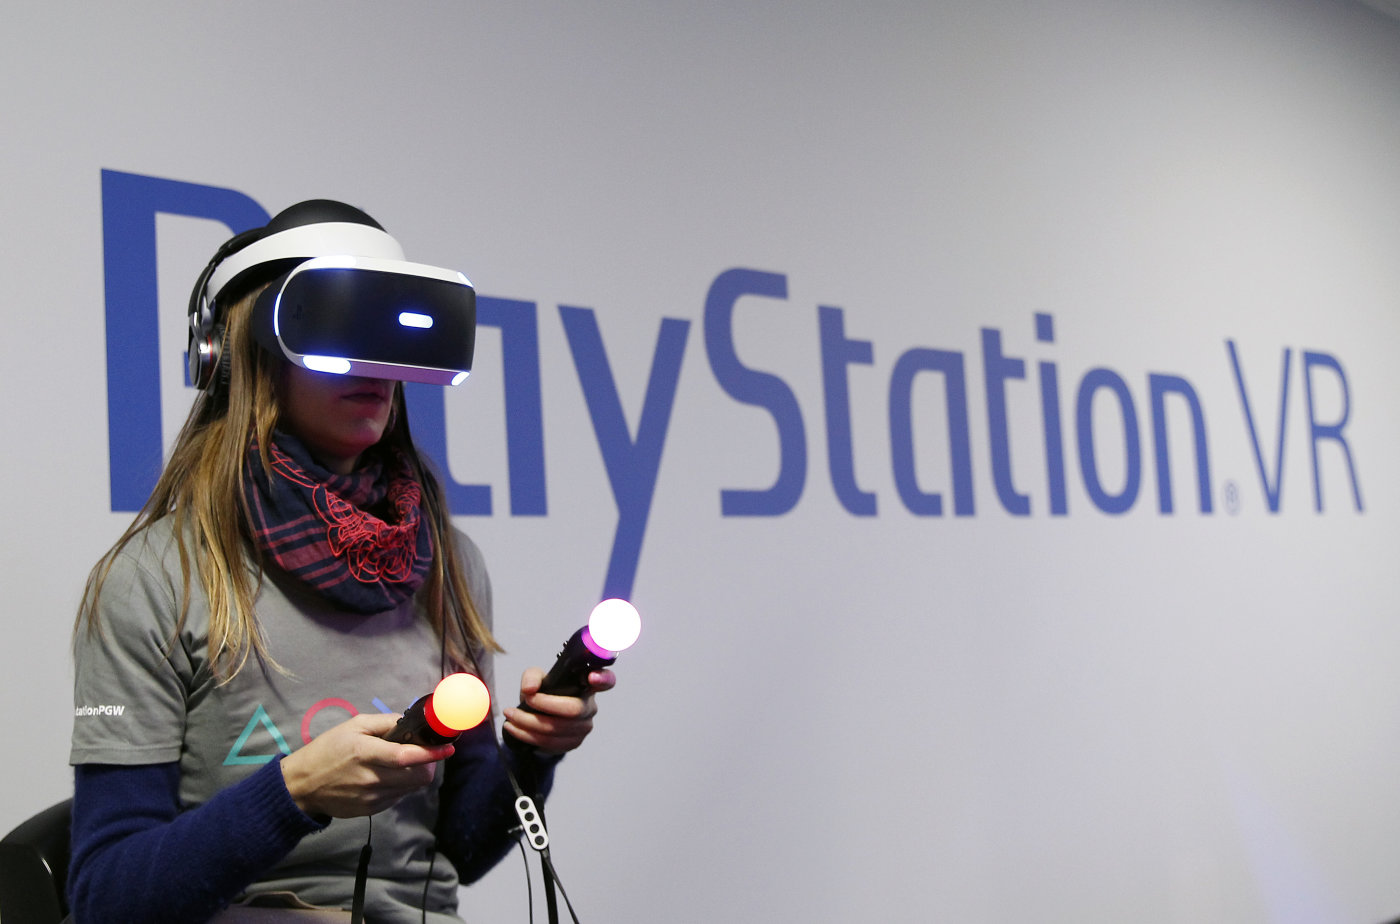 PlayStation VR: Europa 8 dem, USA 18. Skąd różnica?